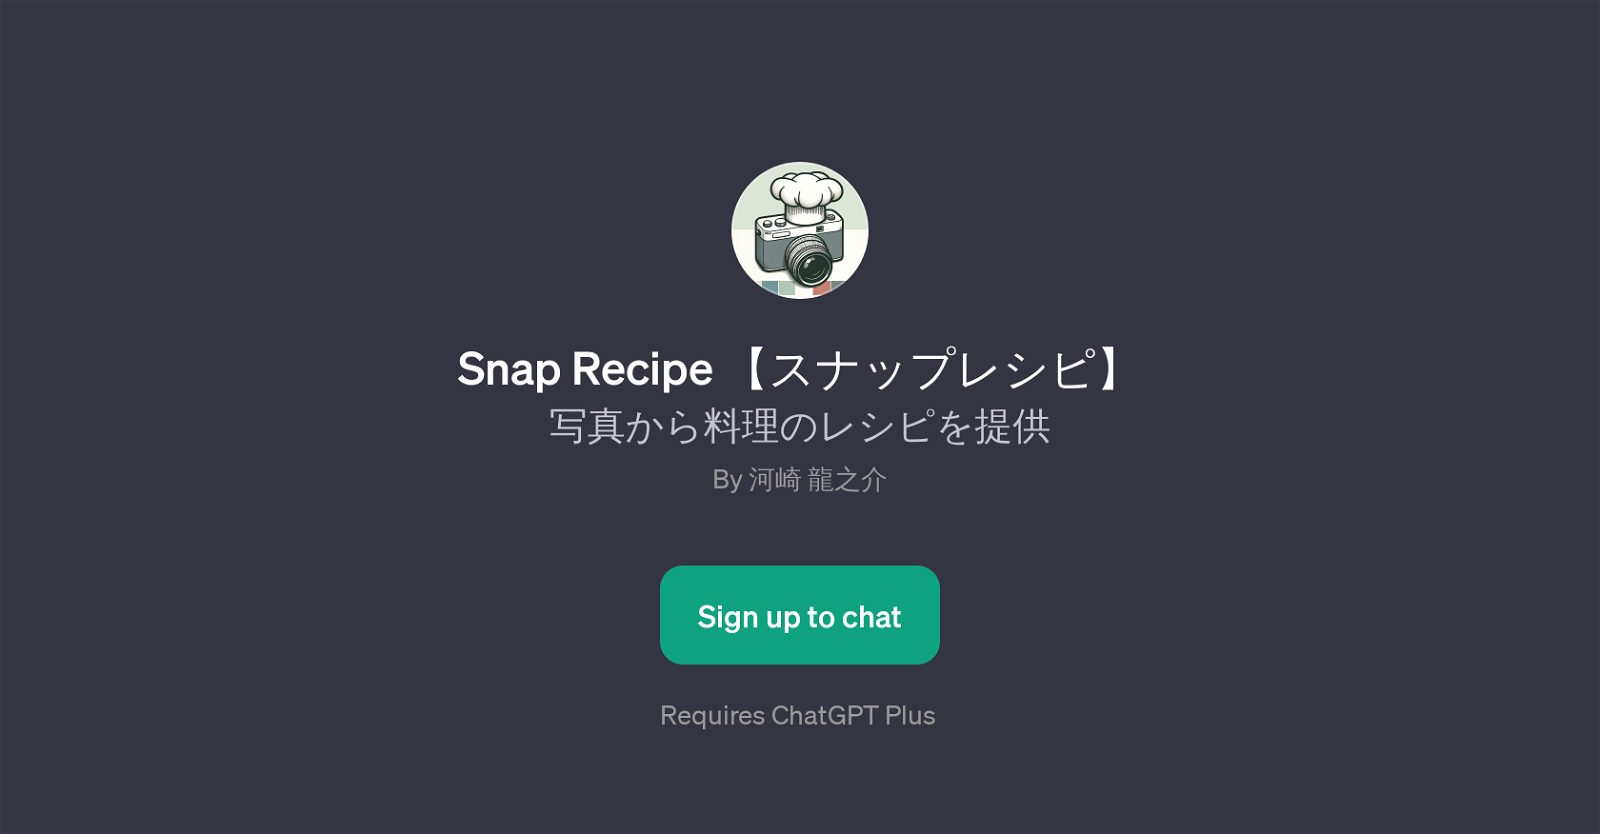 Snap Recipe website